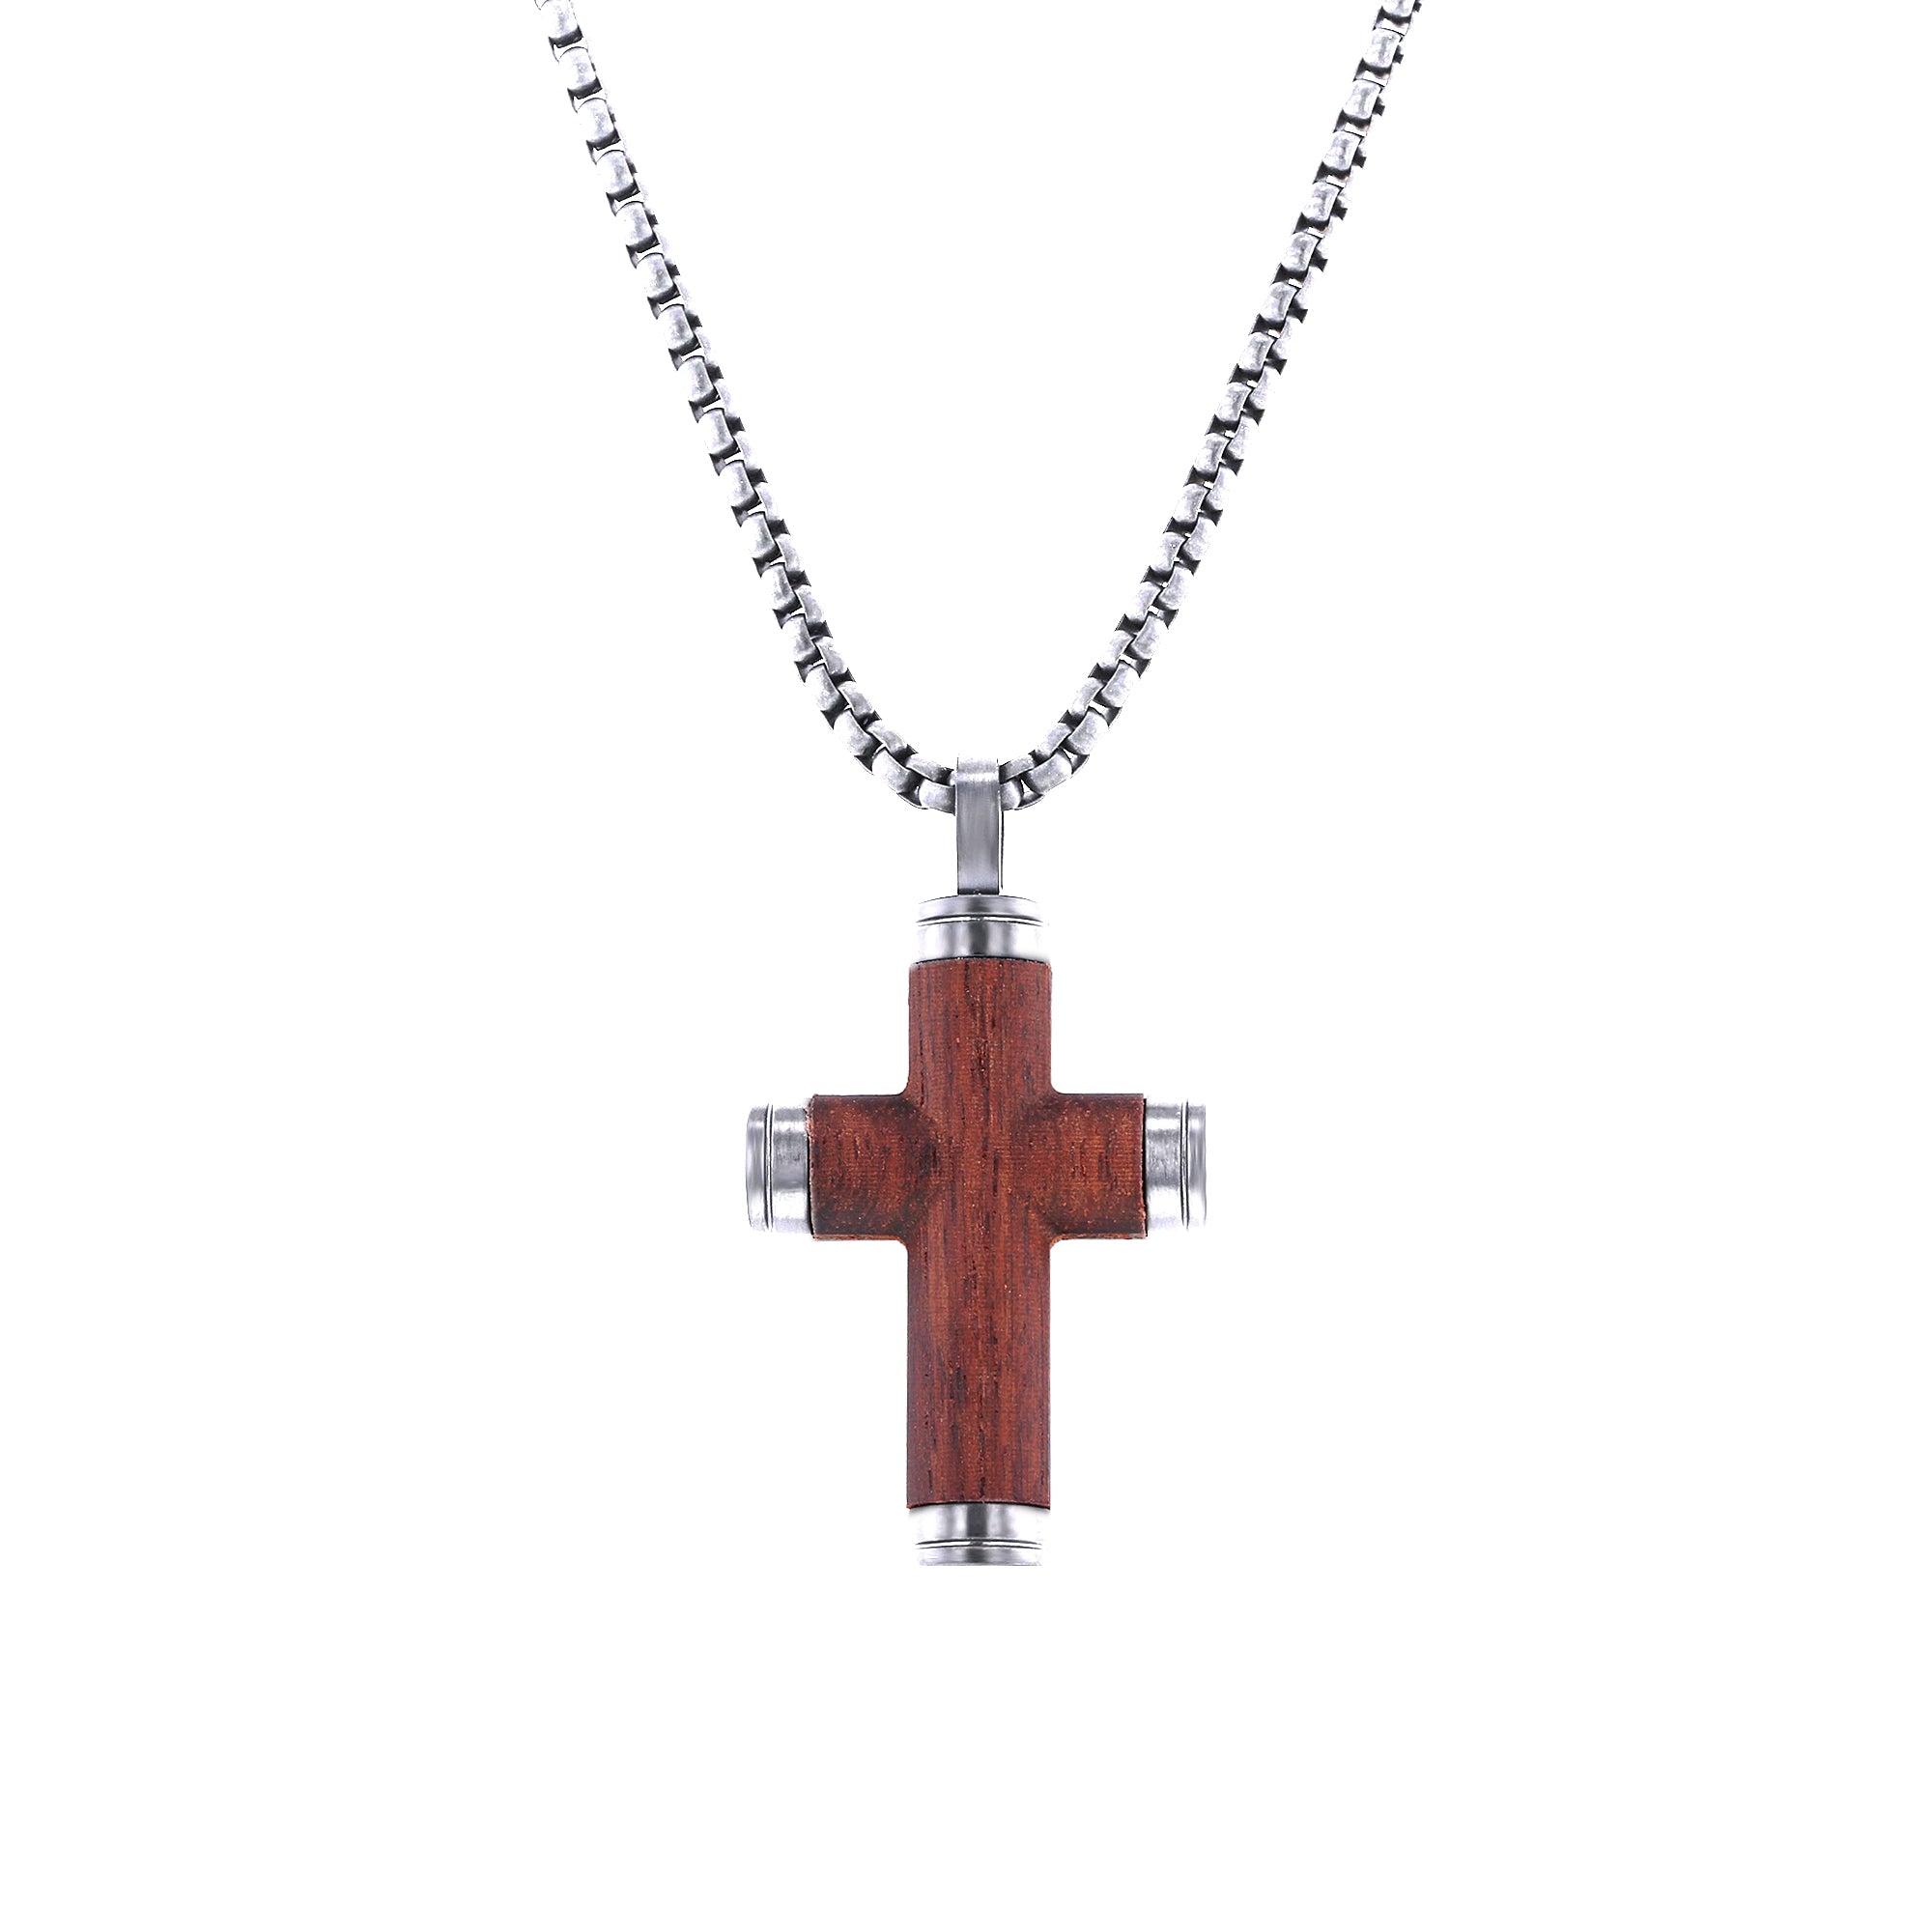 Orthodox cross necklace pendant, Orthodox Christian wooden cross | eBay